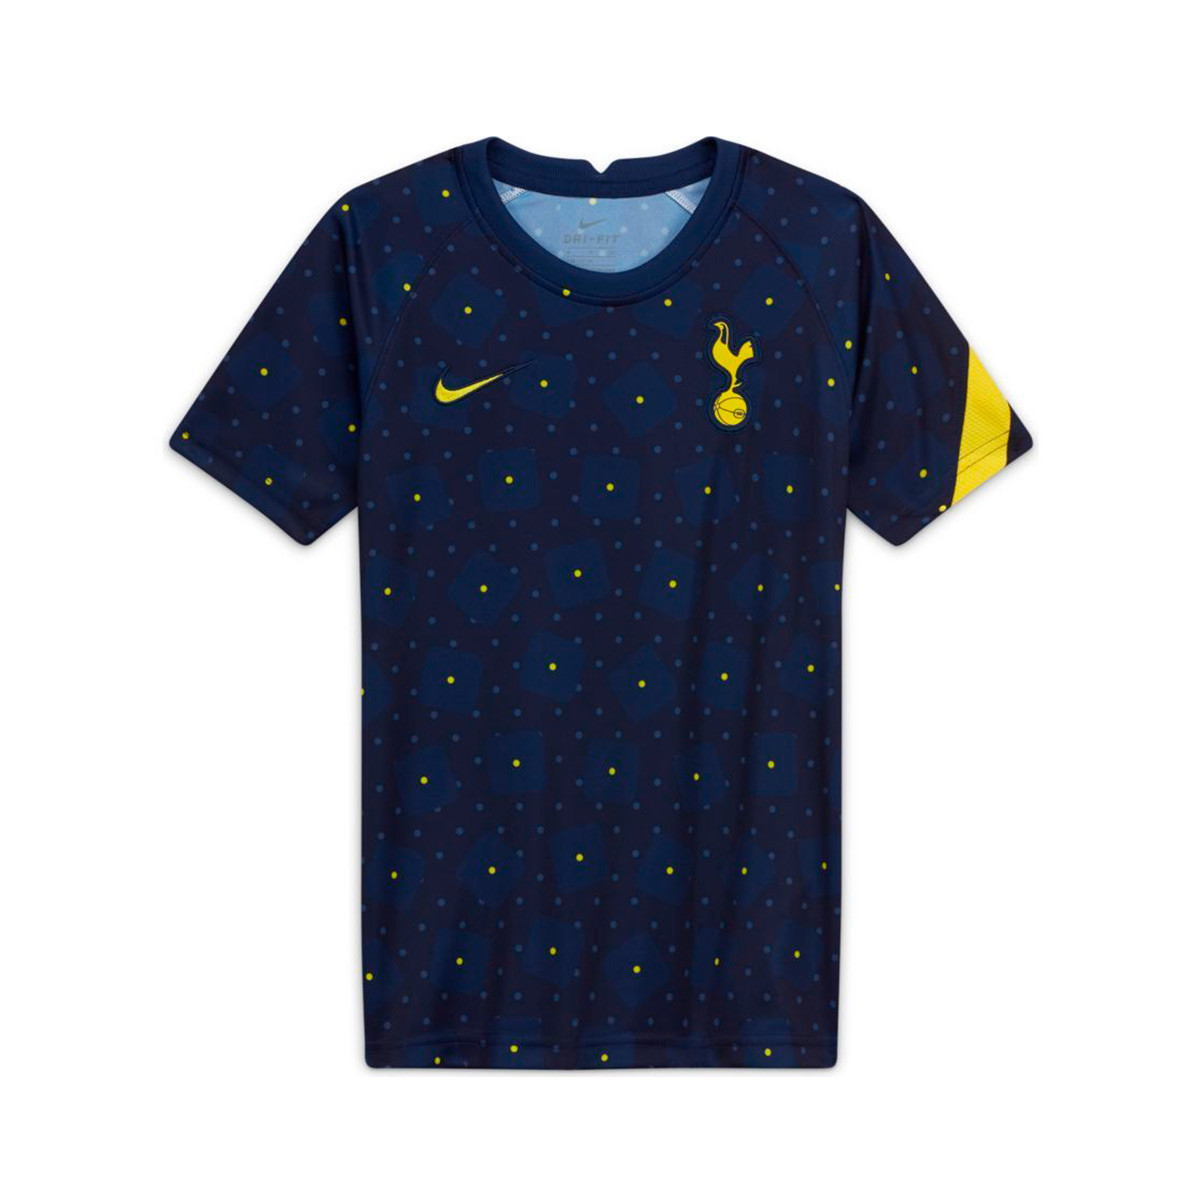 Camiseta Nike Tottenham FC Pre Match Top CL 2020-20201 Niño blue-Tour yellow - Fútbol Emotion